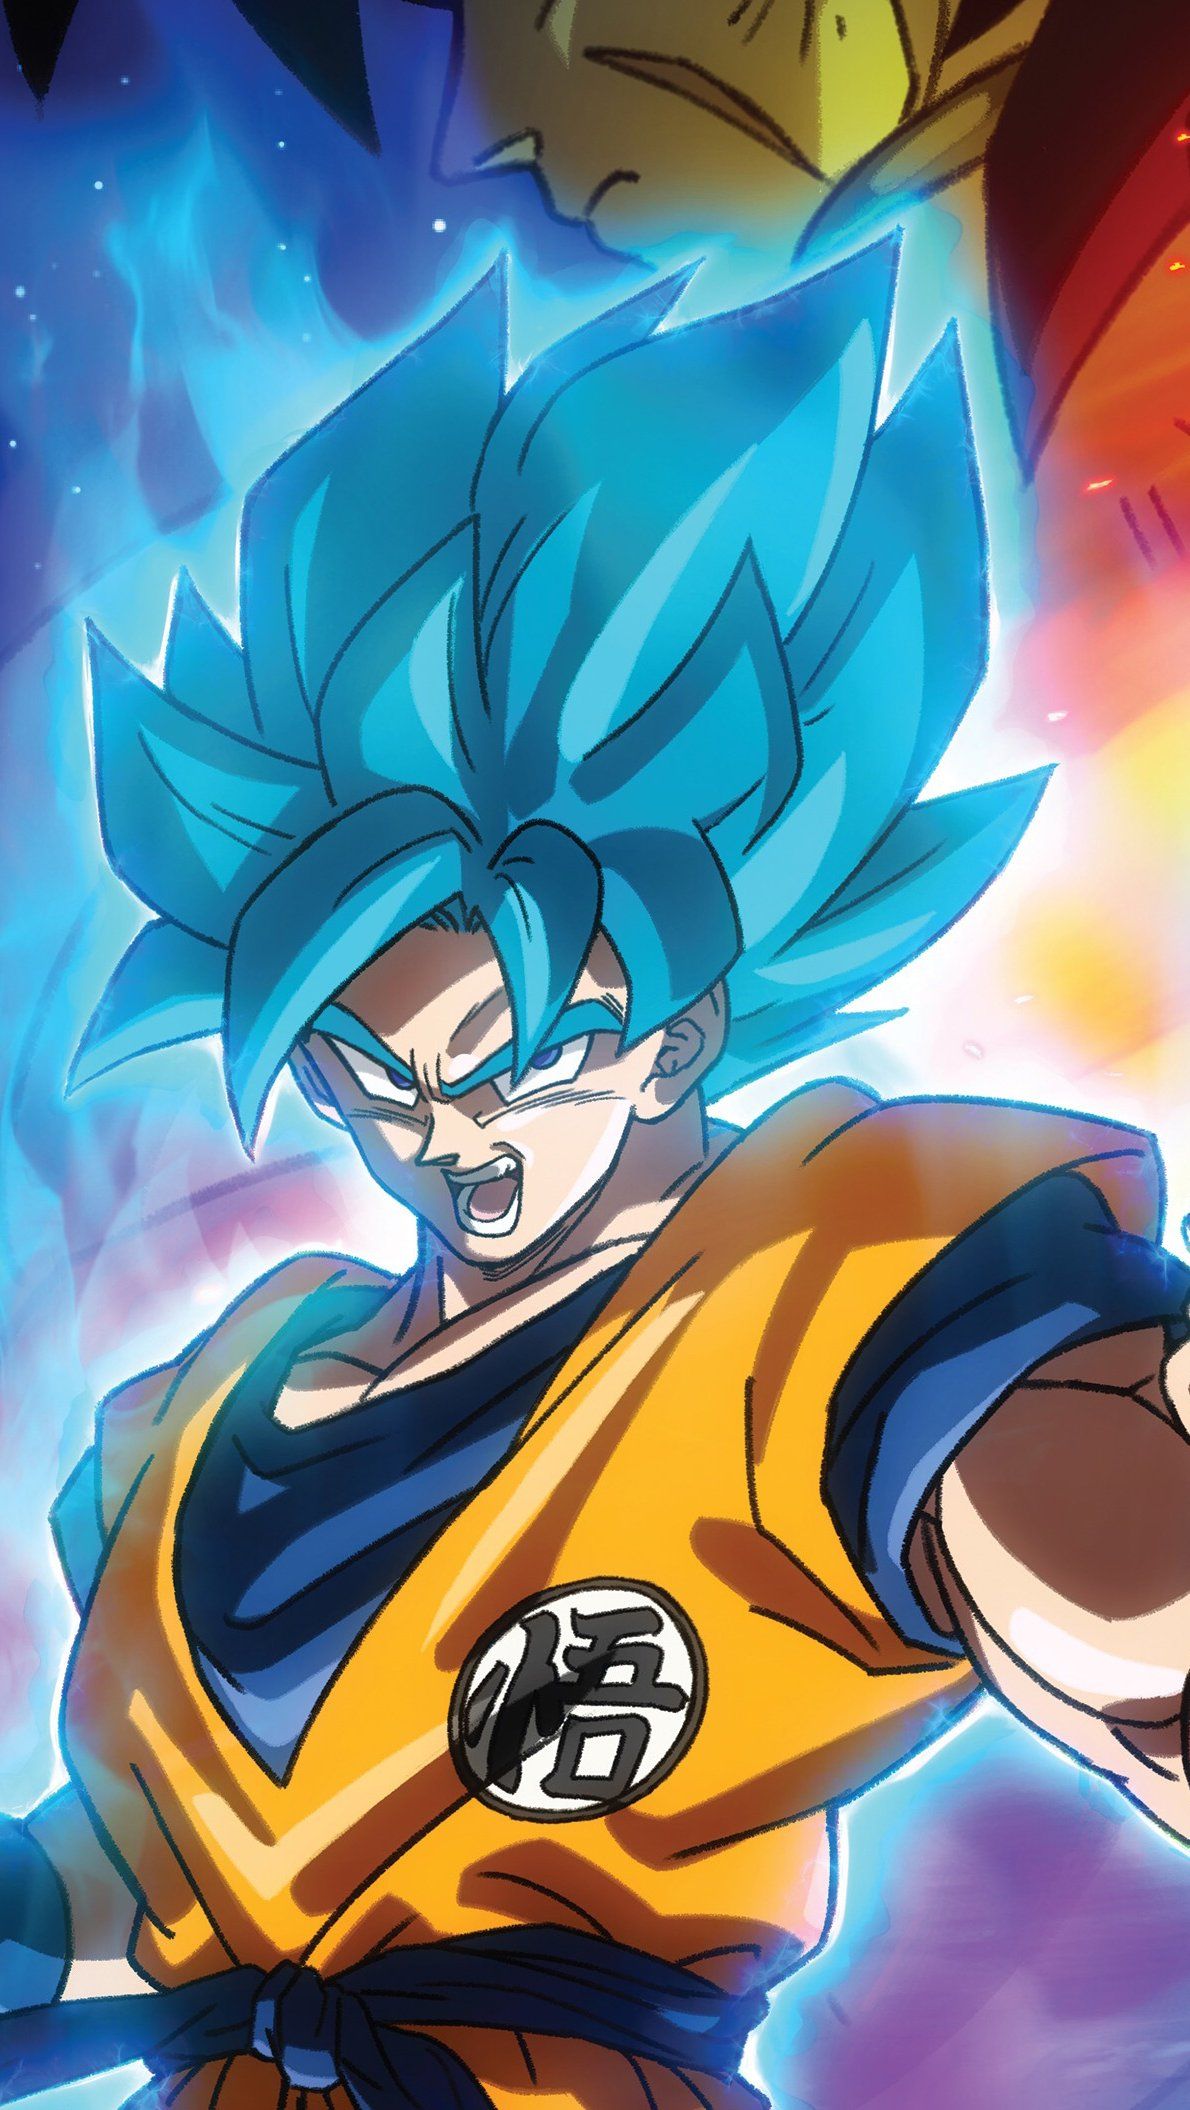 Goku and Vegeta in Dragon Ball Super Broly Movie Anime Wallpaper